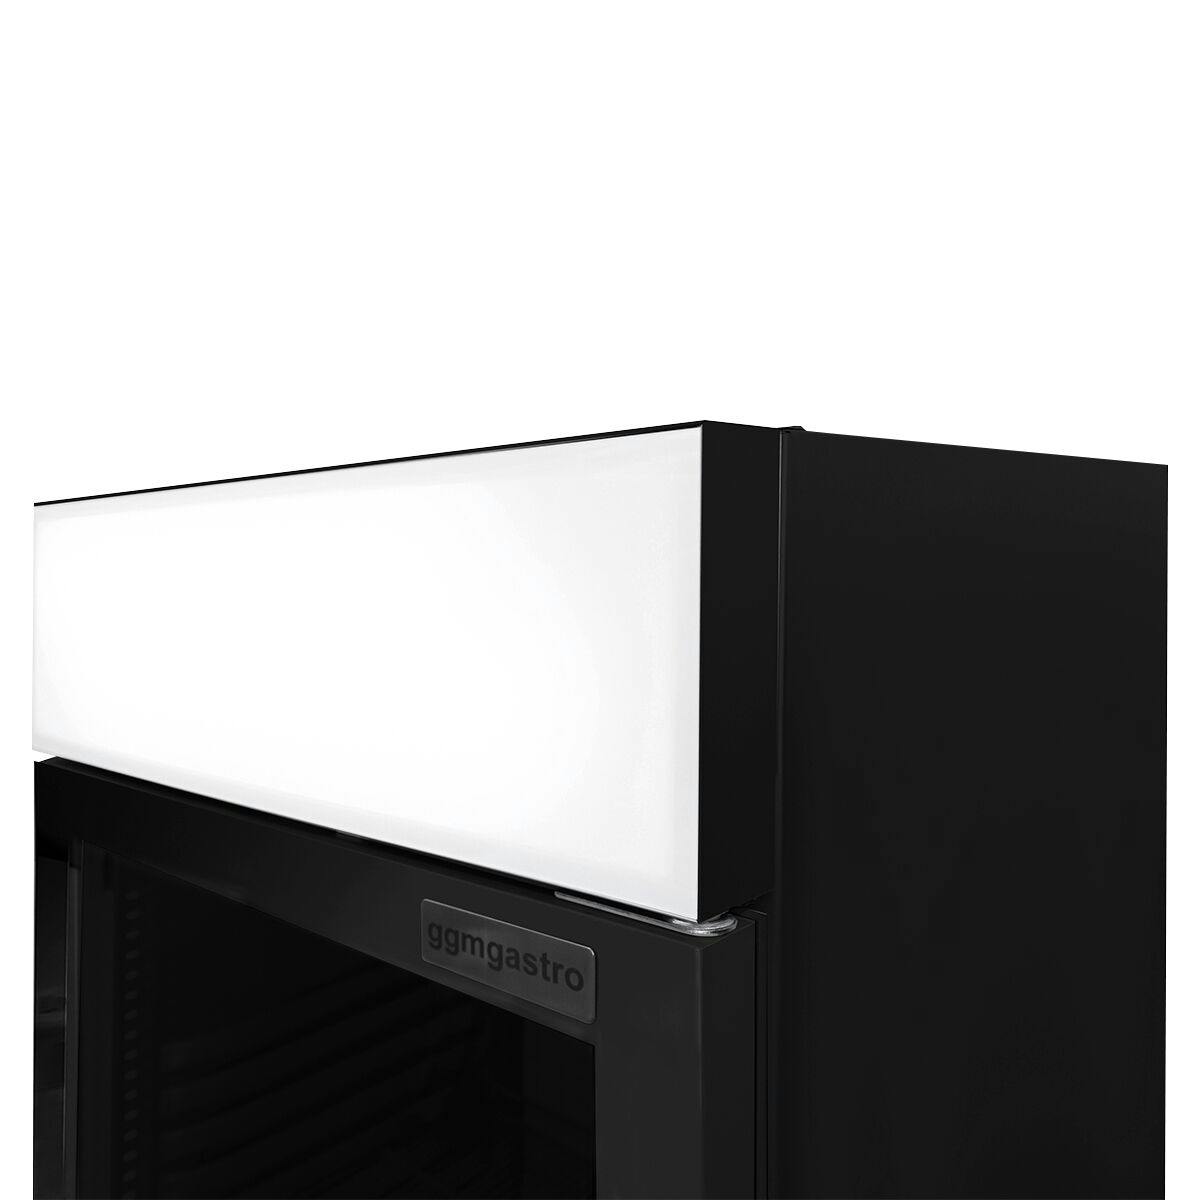 (5 pieces) Beverage refrigerator - 5240 litres (total) - black